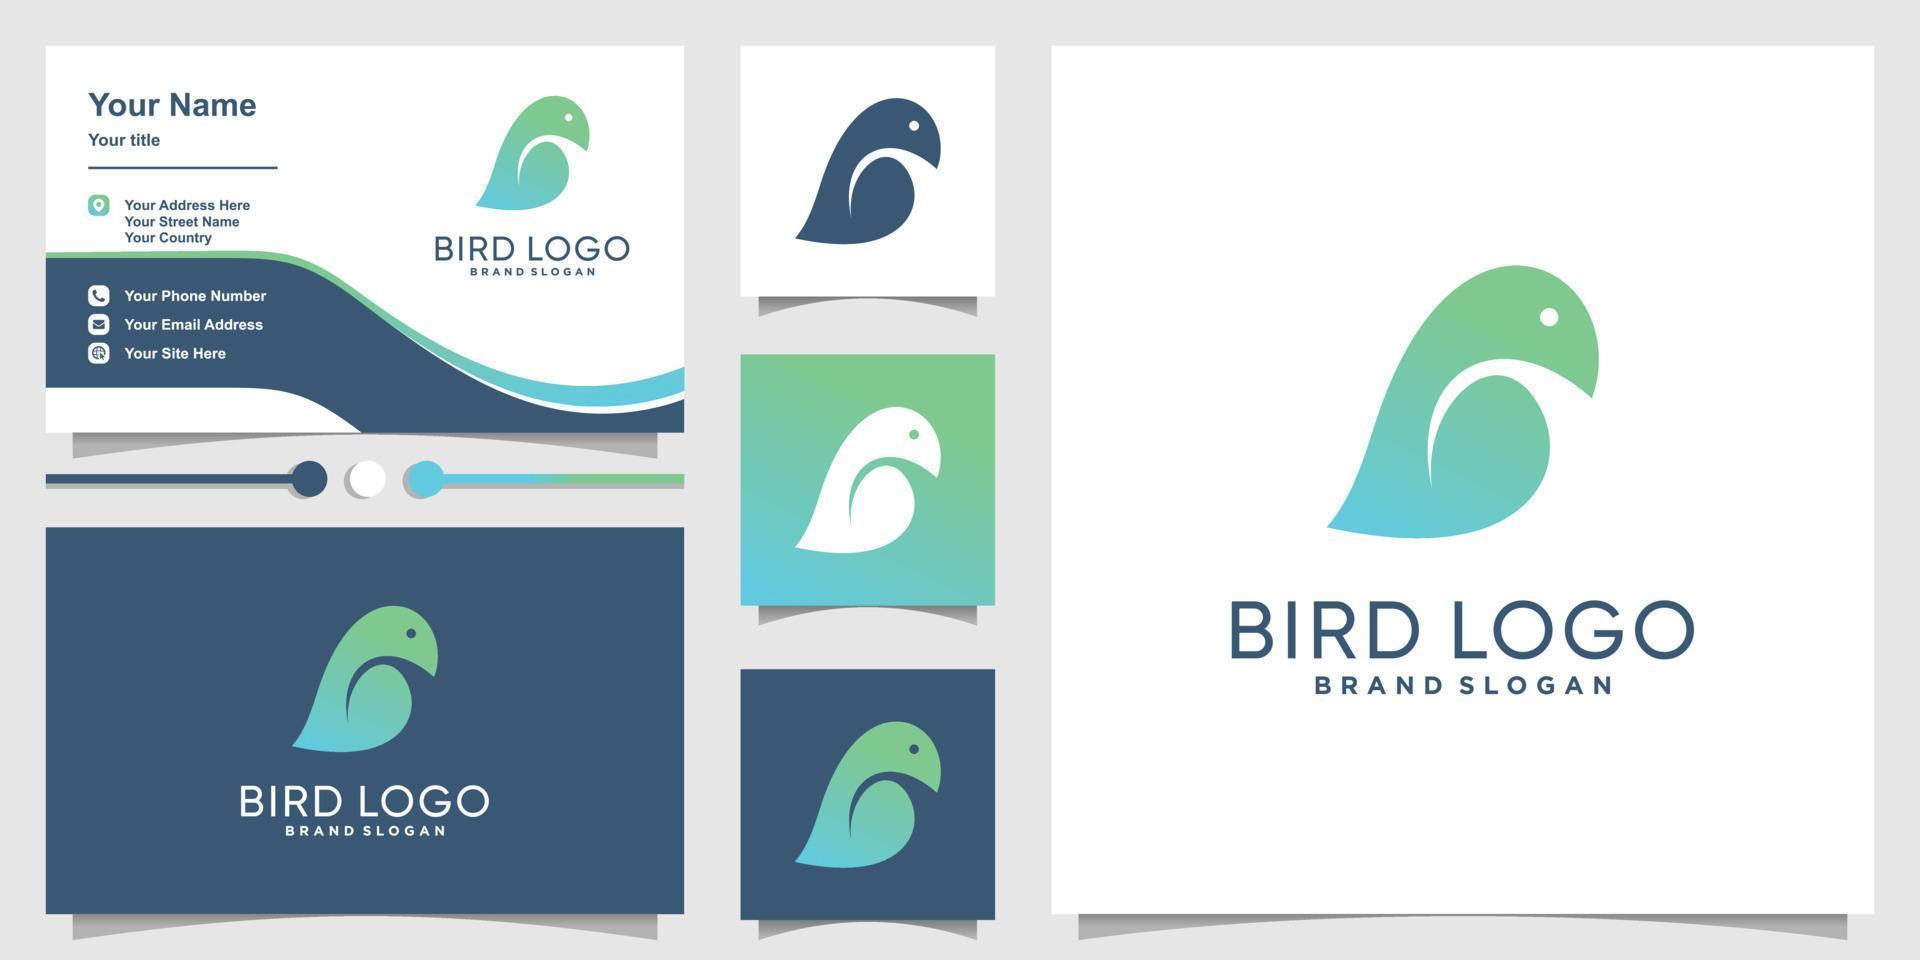 diseño de logotipo de pájaro con vector premium de concepto creativo